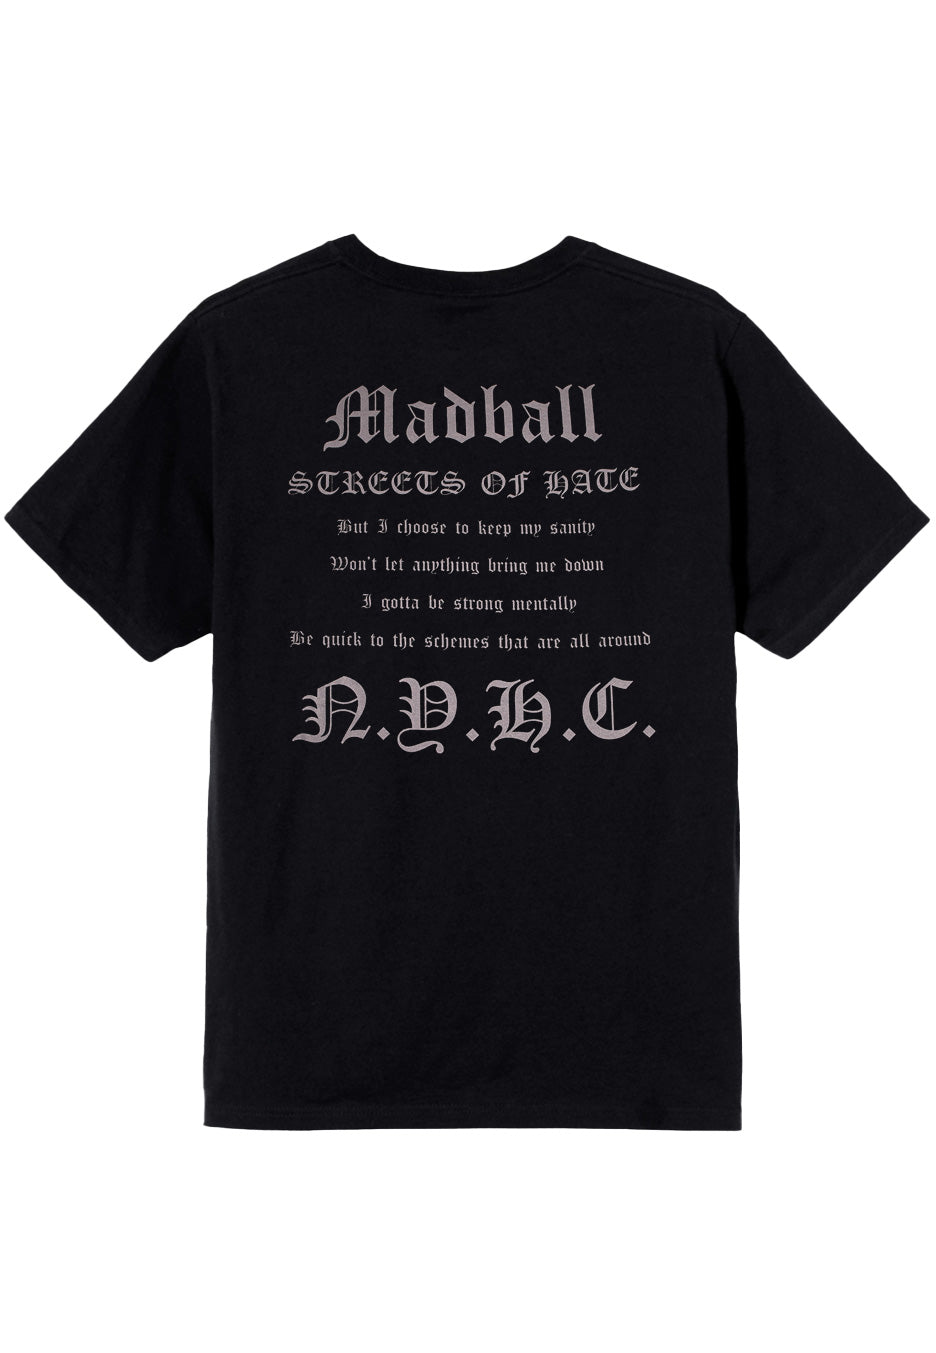 Madball - Streets Of Hate - T-Shirt